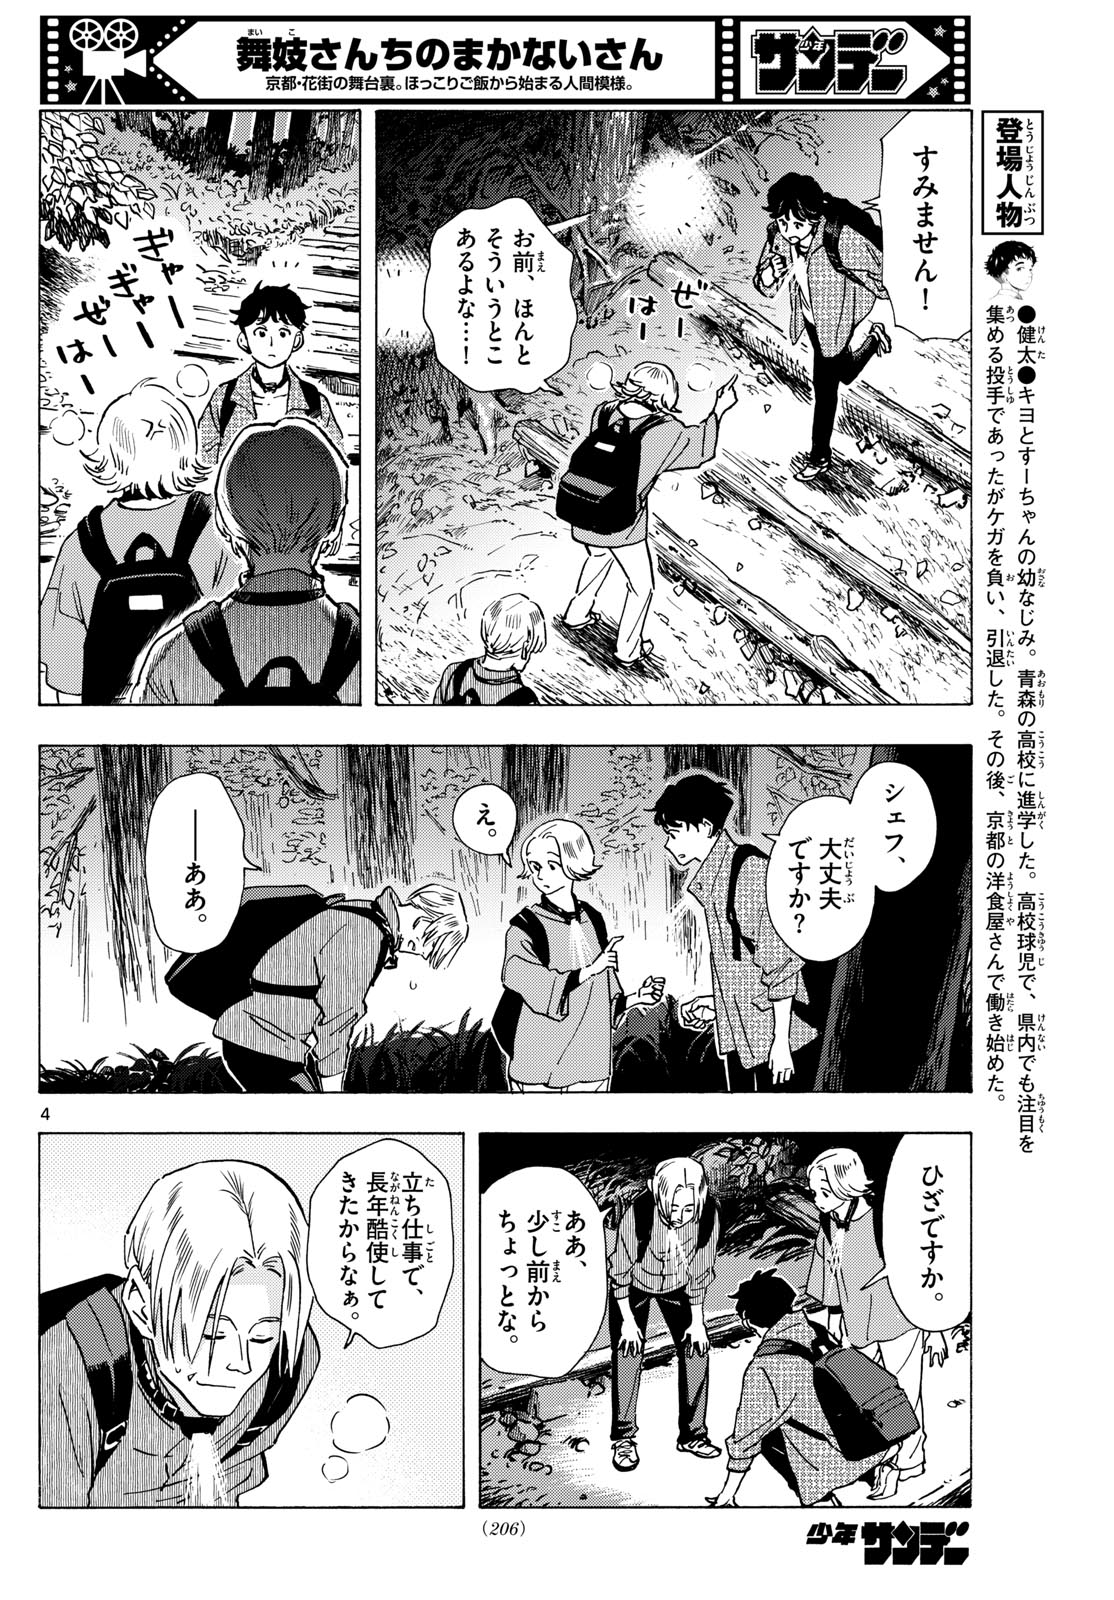 Maiko-san Chi no Makanai-san - Chapter 295 - Page 4